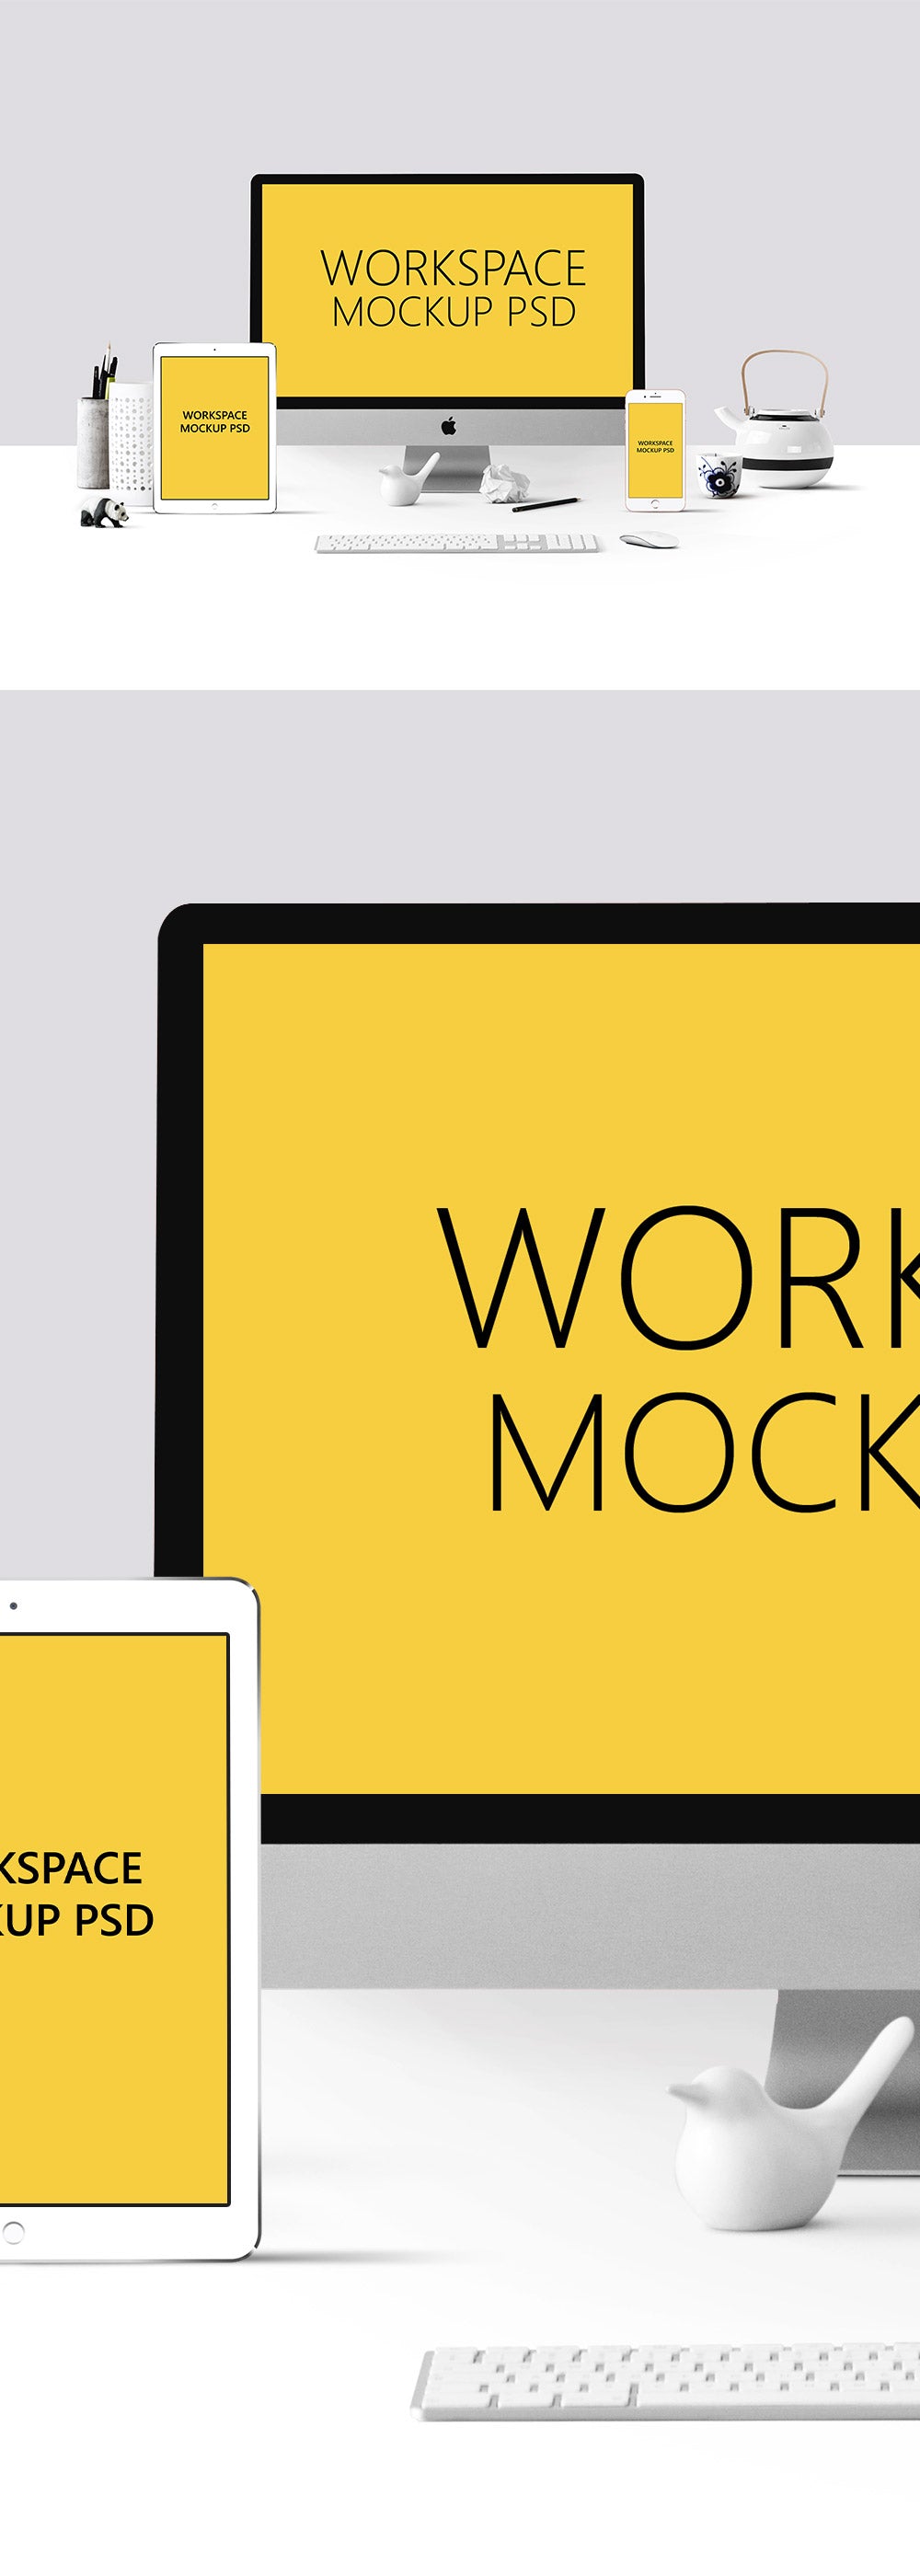 Free Workspace Mockup Psd Imac Ipad And Iphone Creativebooster